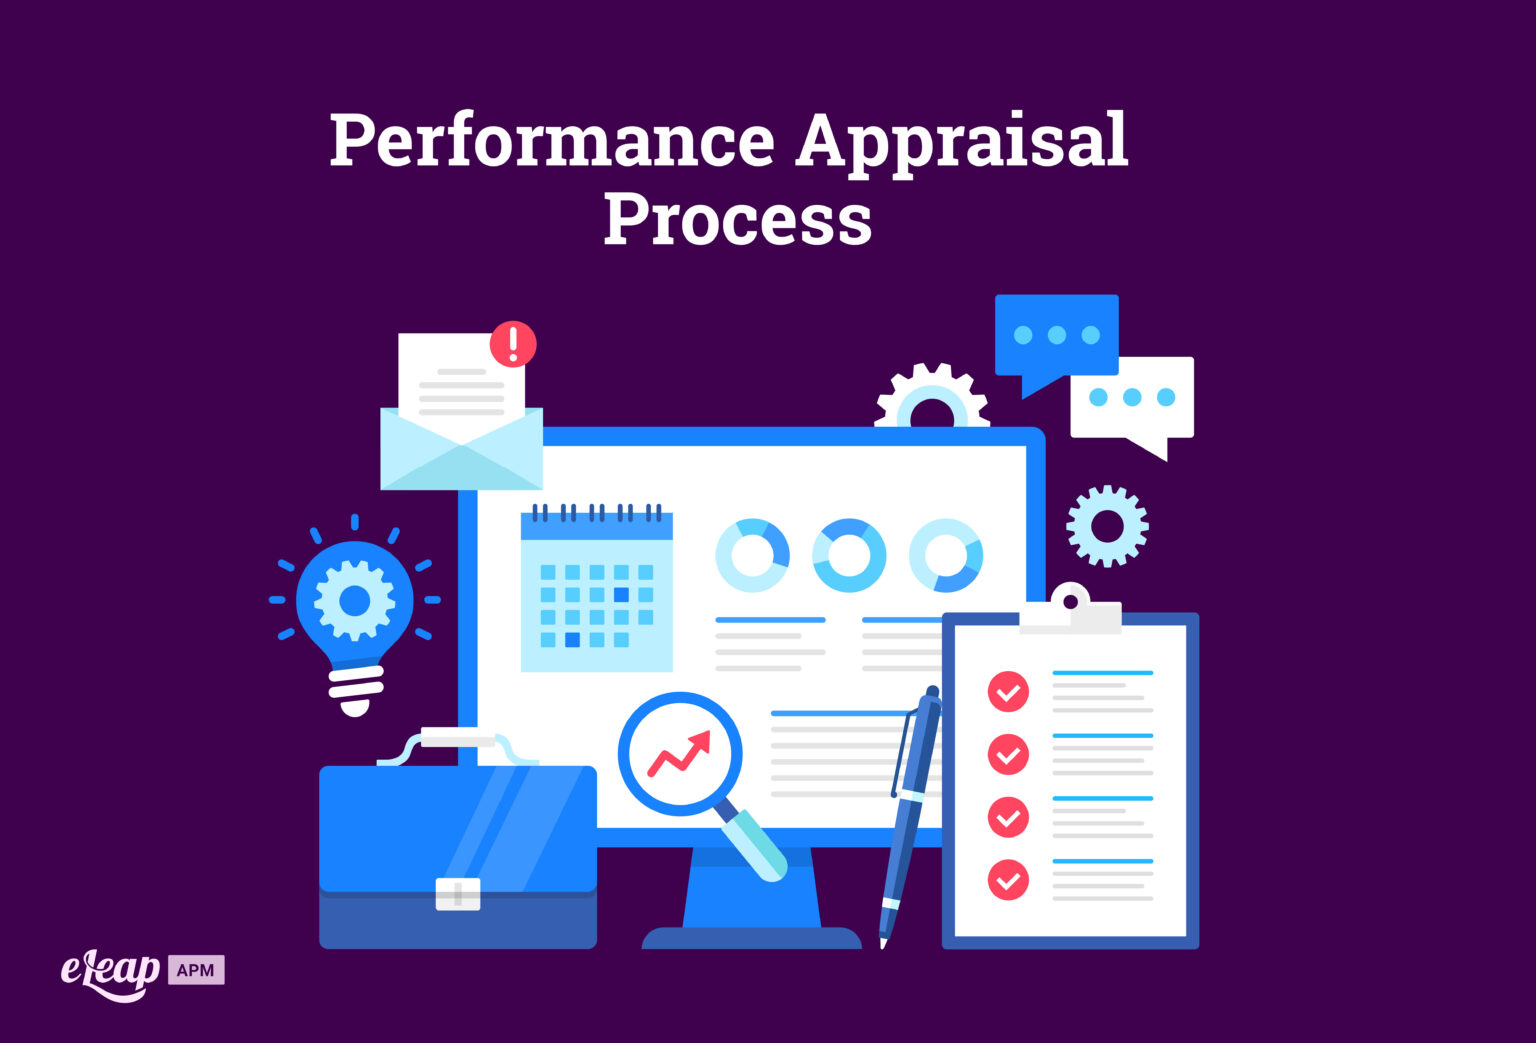 Performance Appraisal Process: How to Run a Performance Appraisal